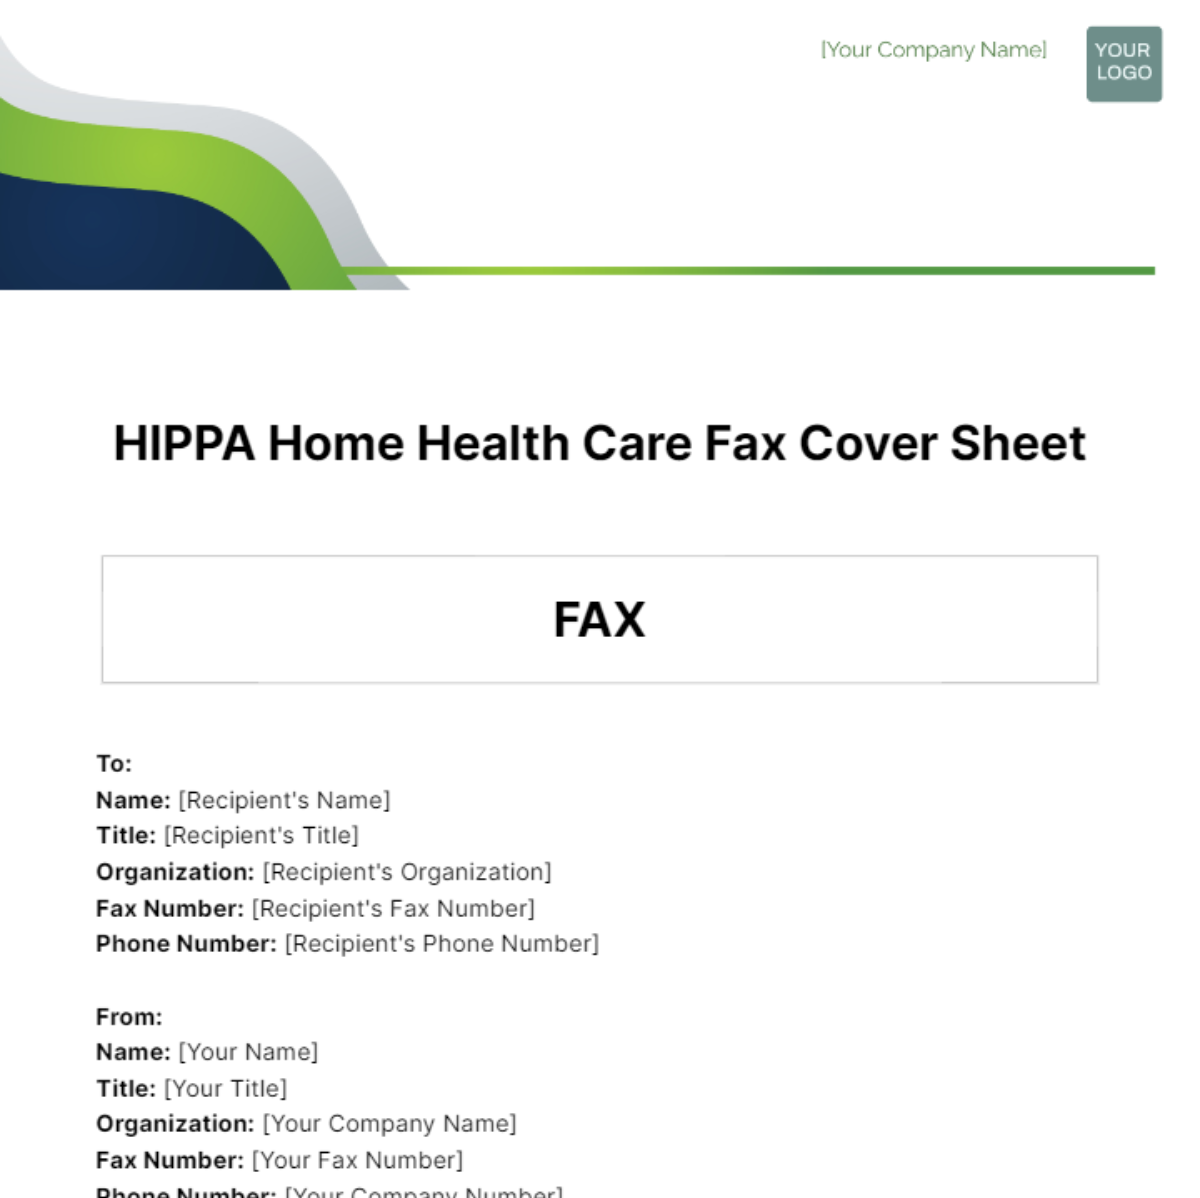 Free HIPPA Home Health Care Fax Cover Sheet Template